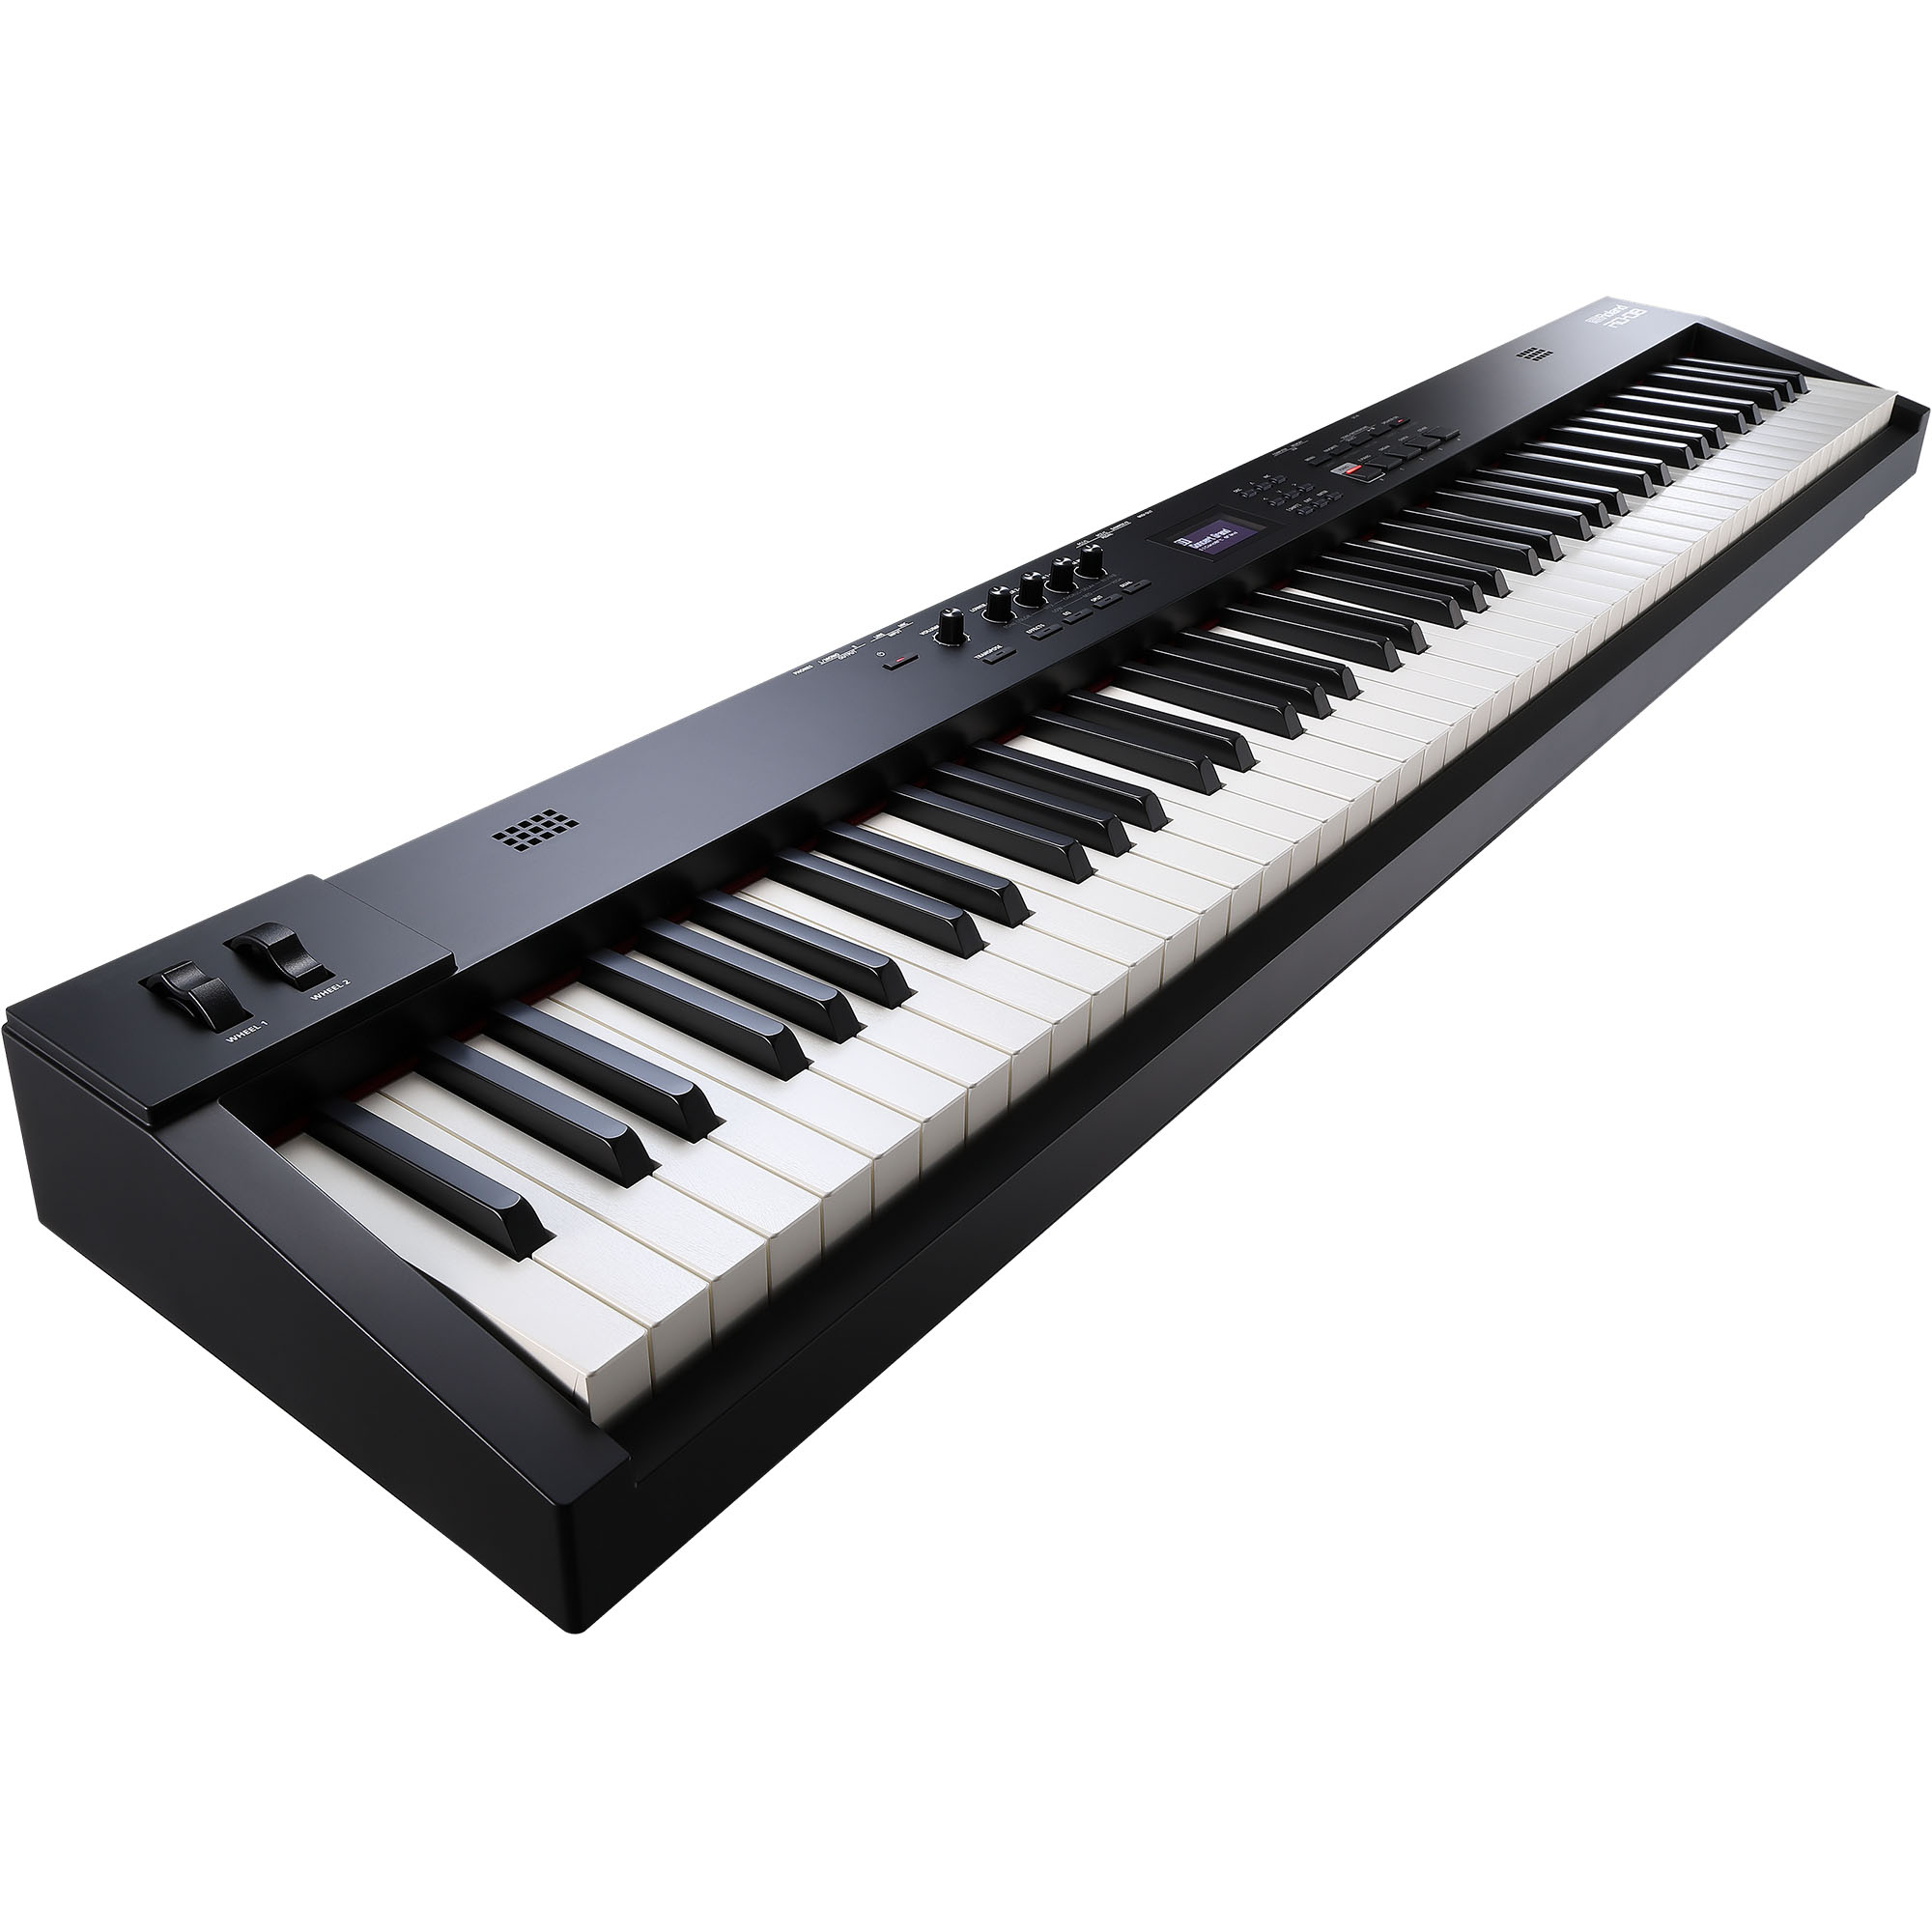 Roland Rd-08 - Stage keyboard - Variation 1